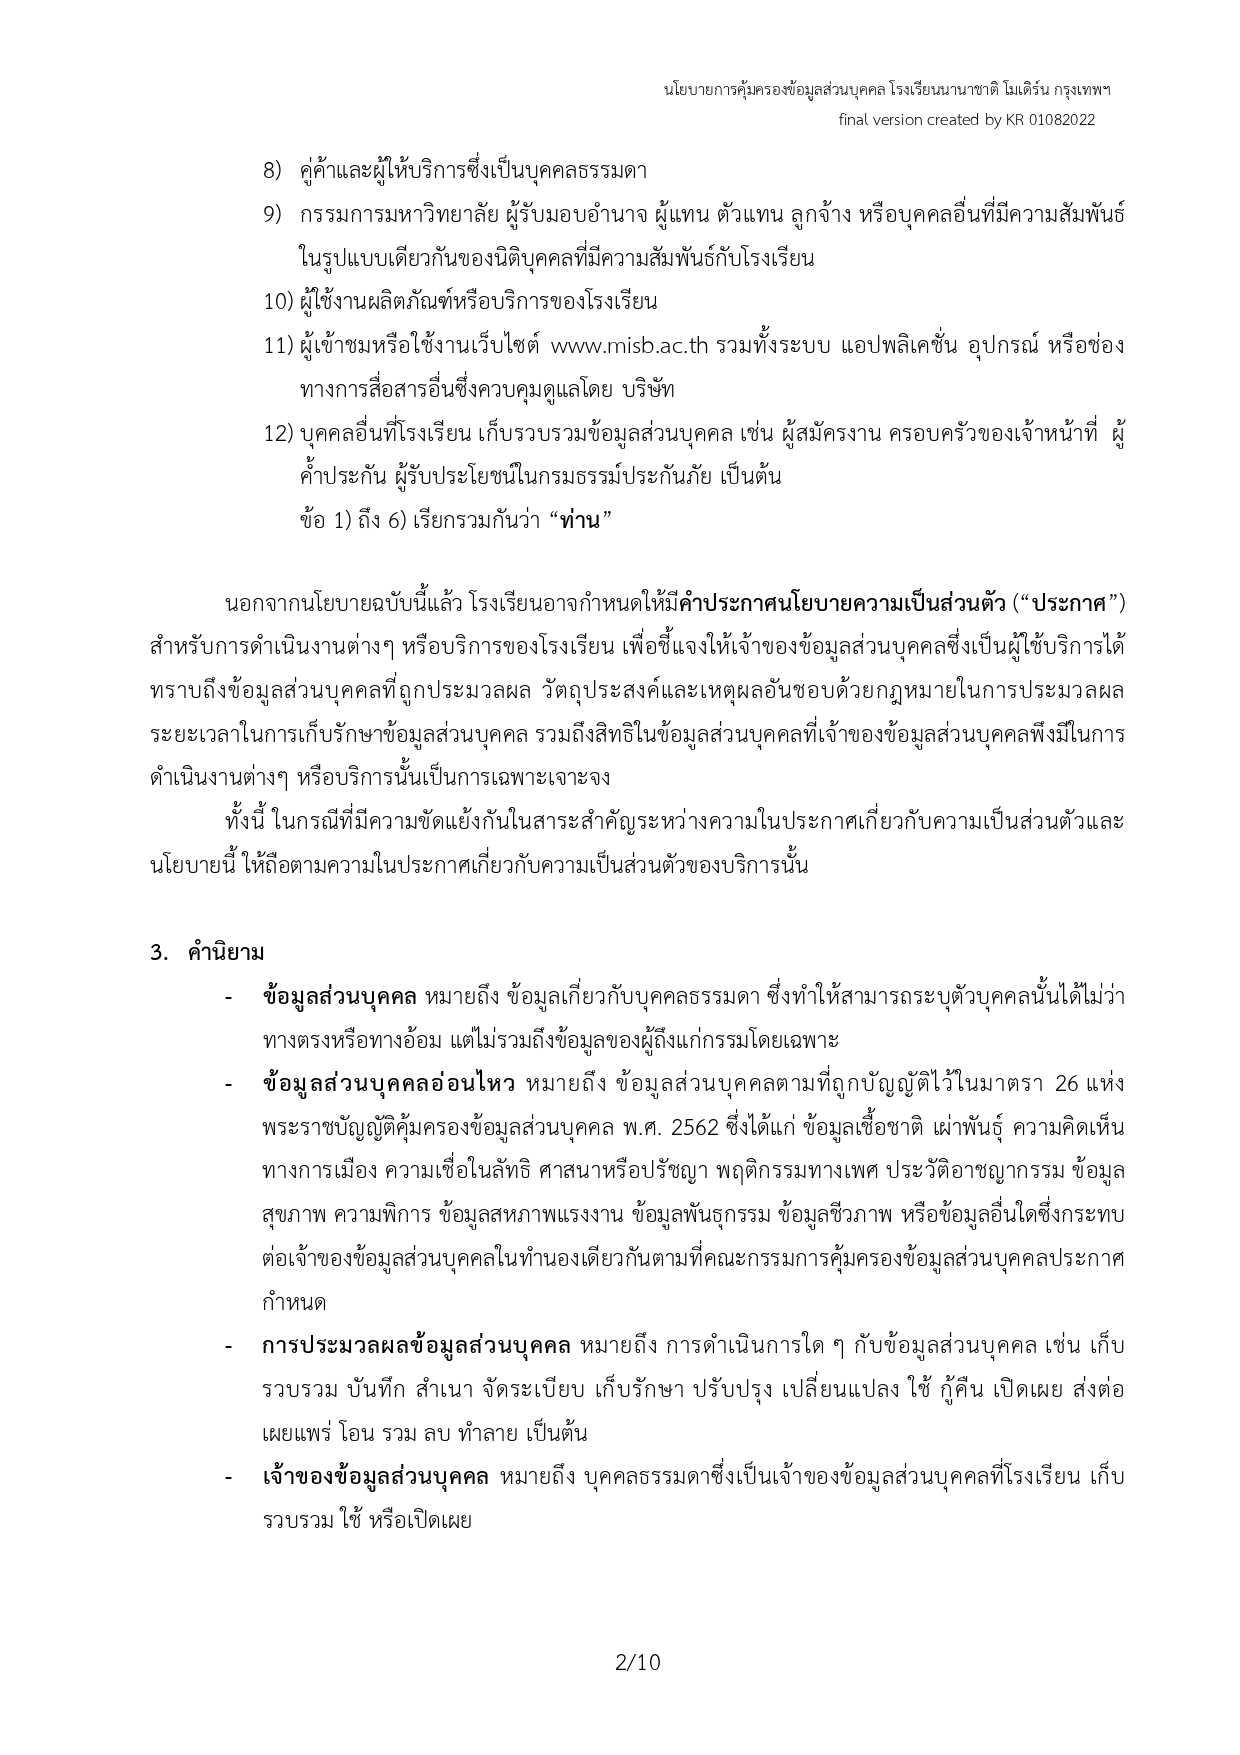 PDPA MISB ภาษาไทย final version 01012566 ไม่ลงชื่อ page 0002